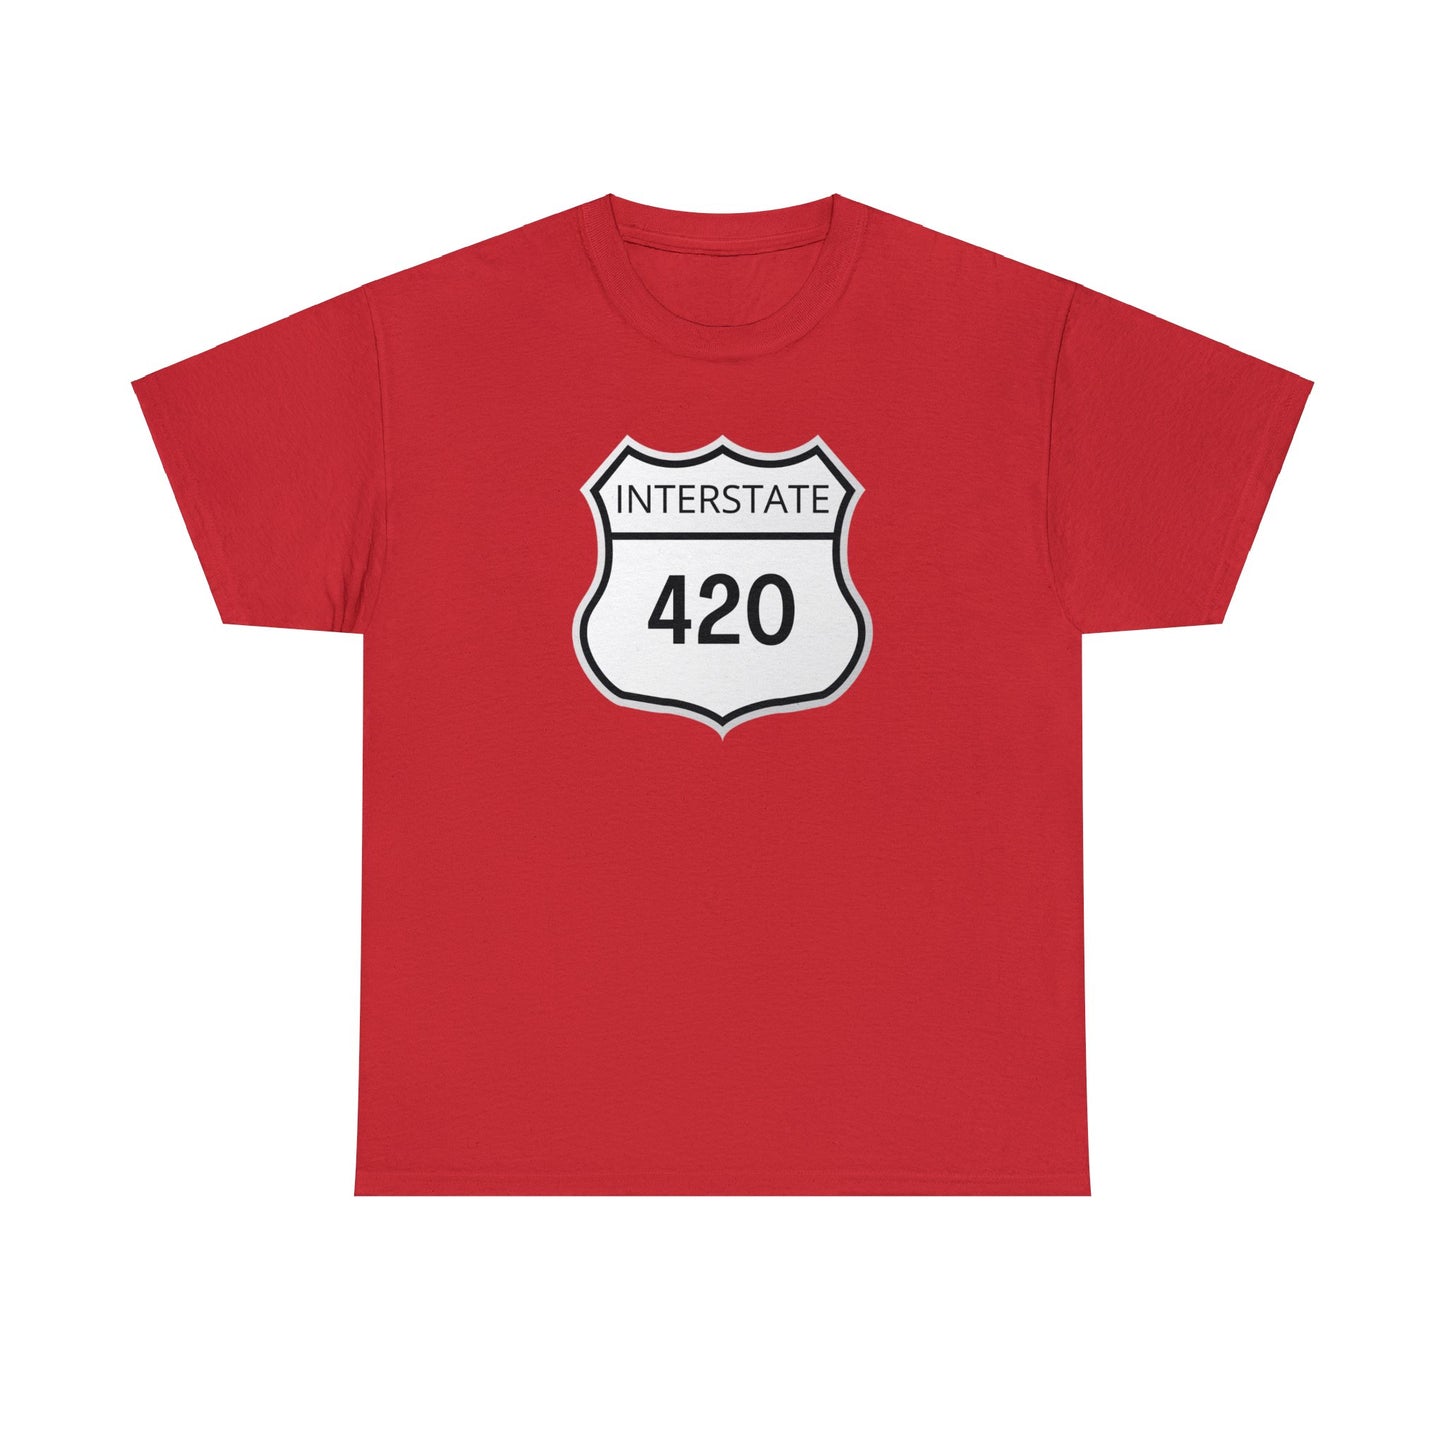 Interstate 420 Shirt Tee